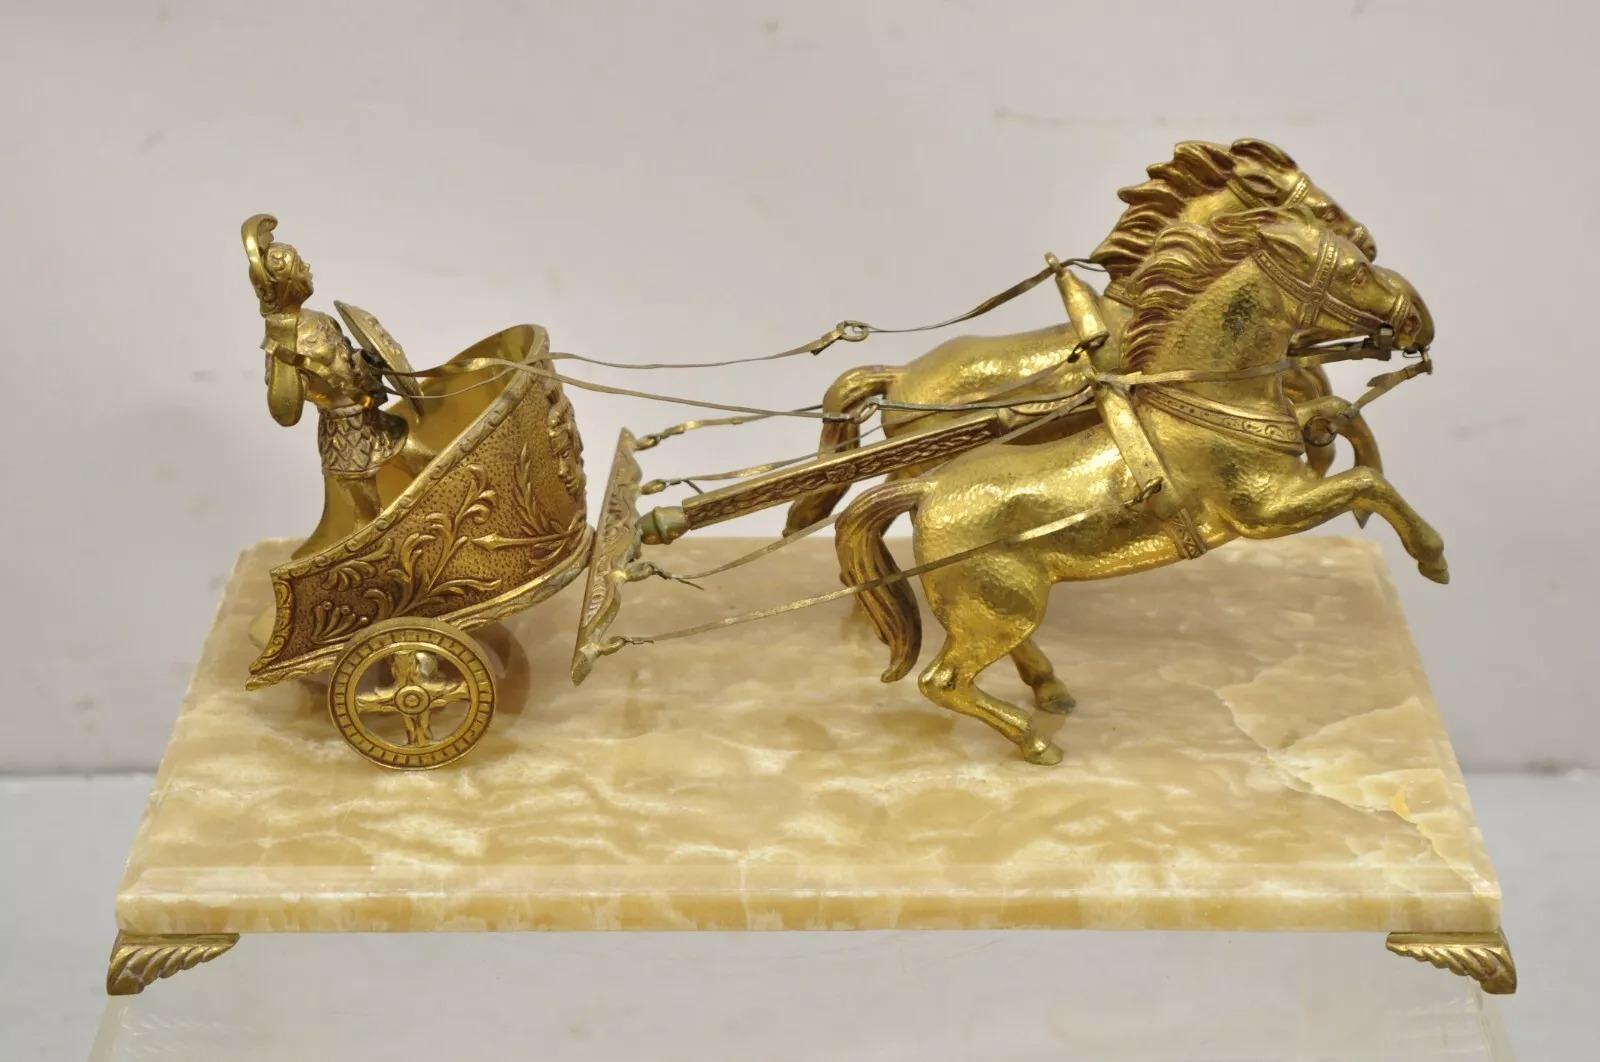 Vintage Gold Gilt Metal Roman Horse Drawn Chariot Sculpture on Marble Base. Circa Mid 20th Century. Measurements: 8.5